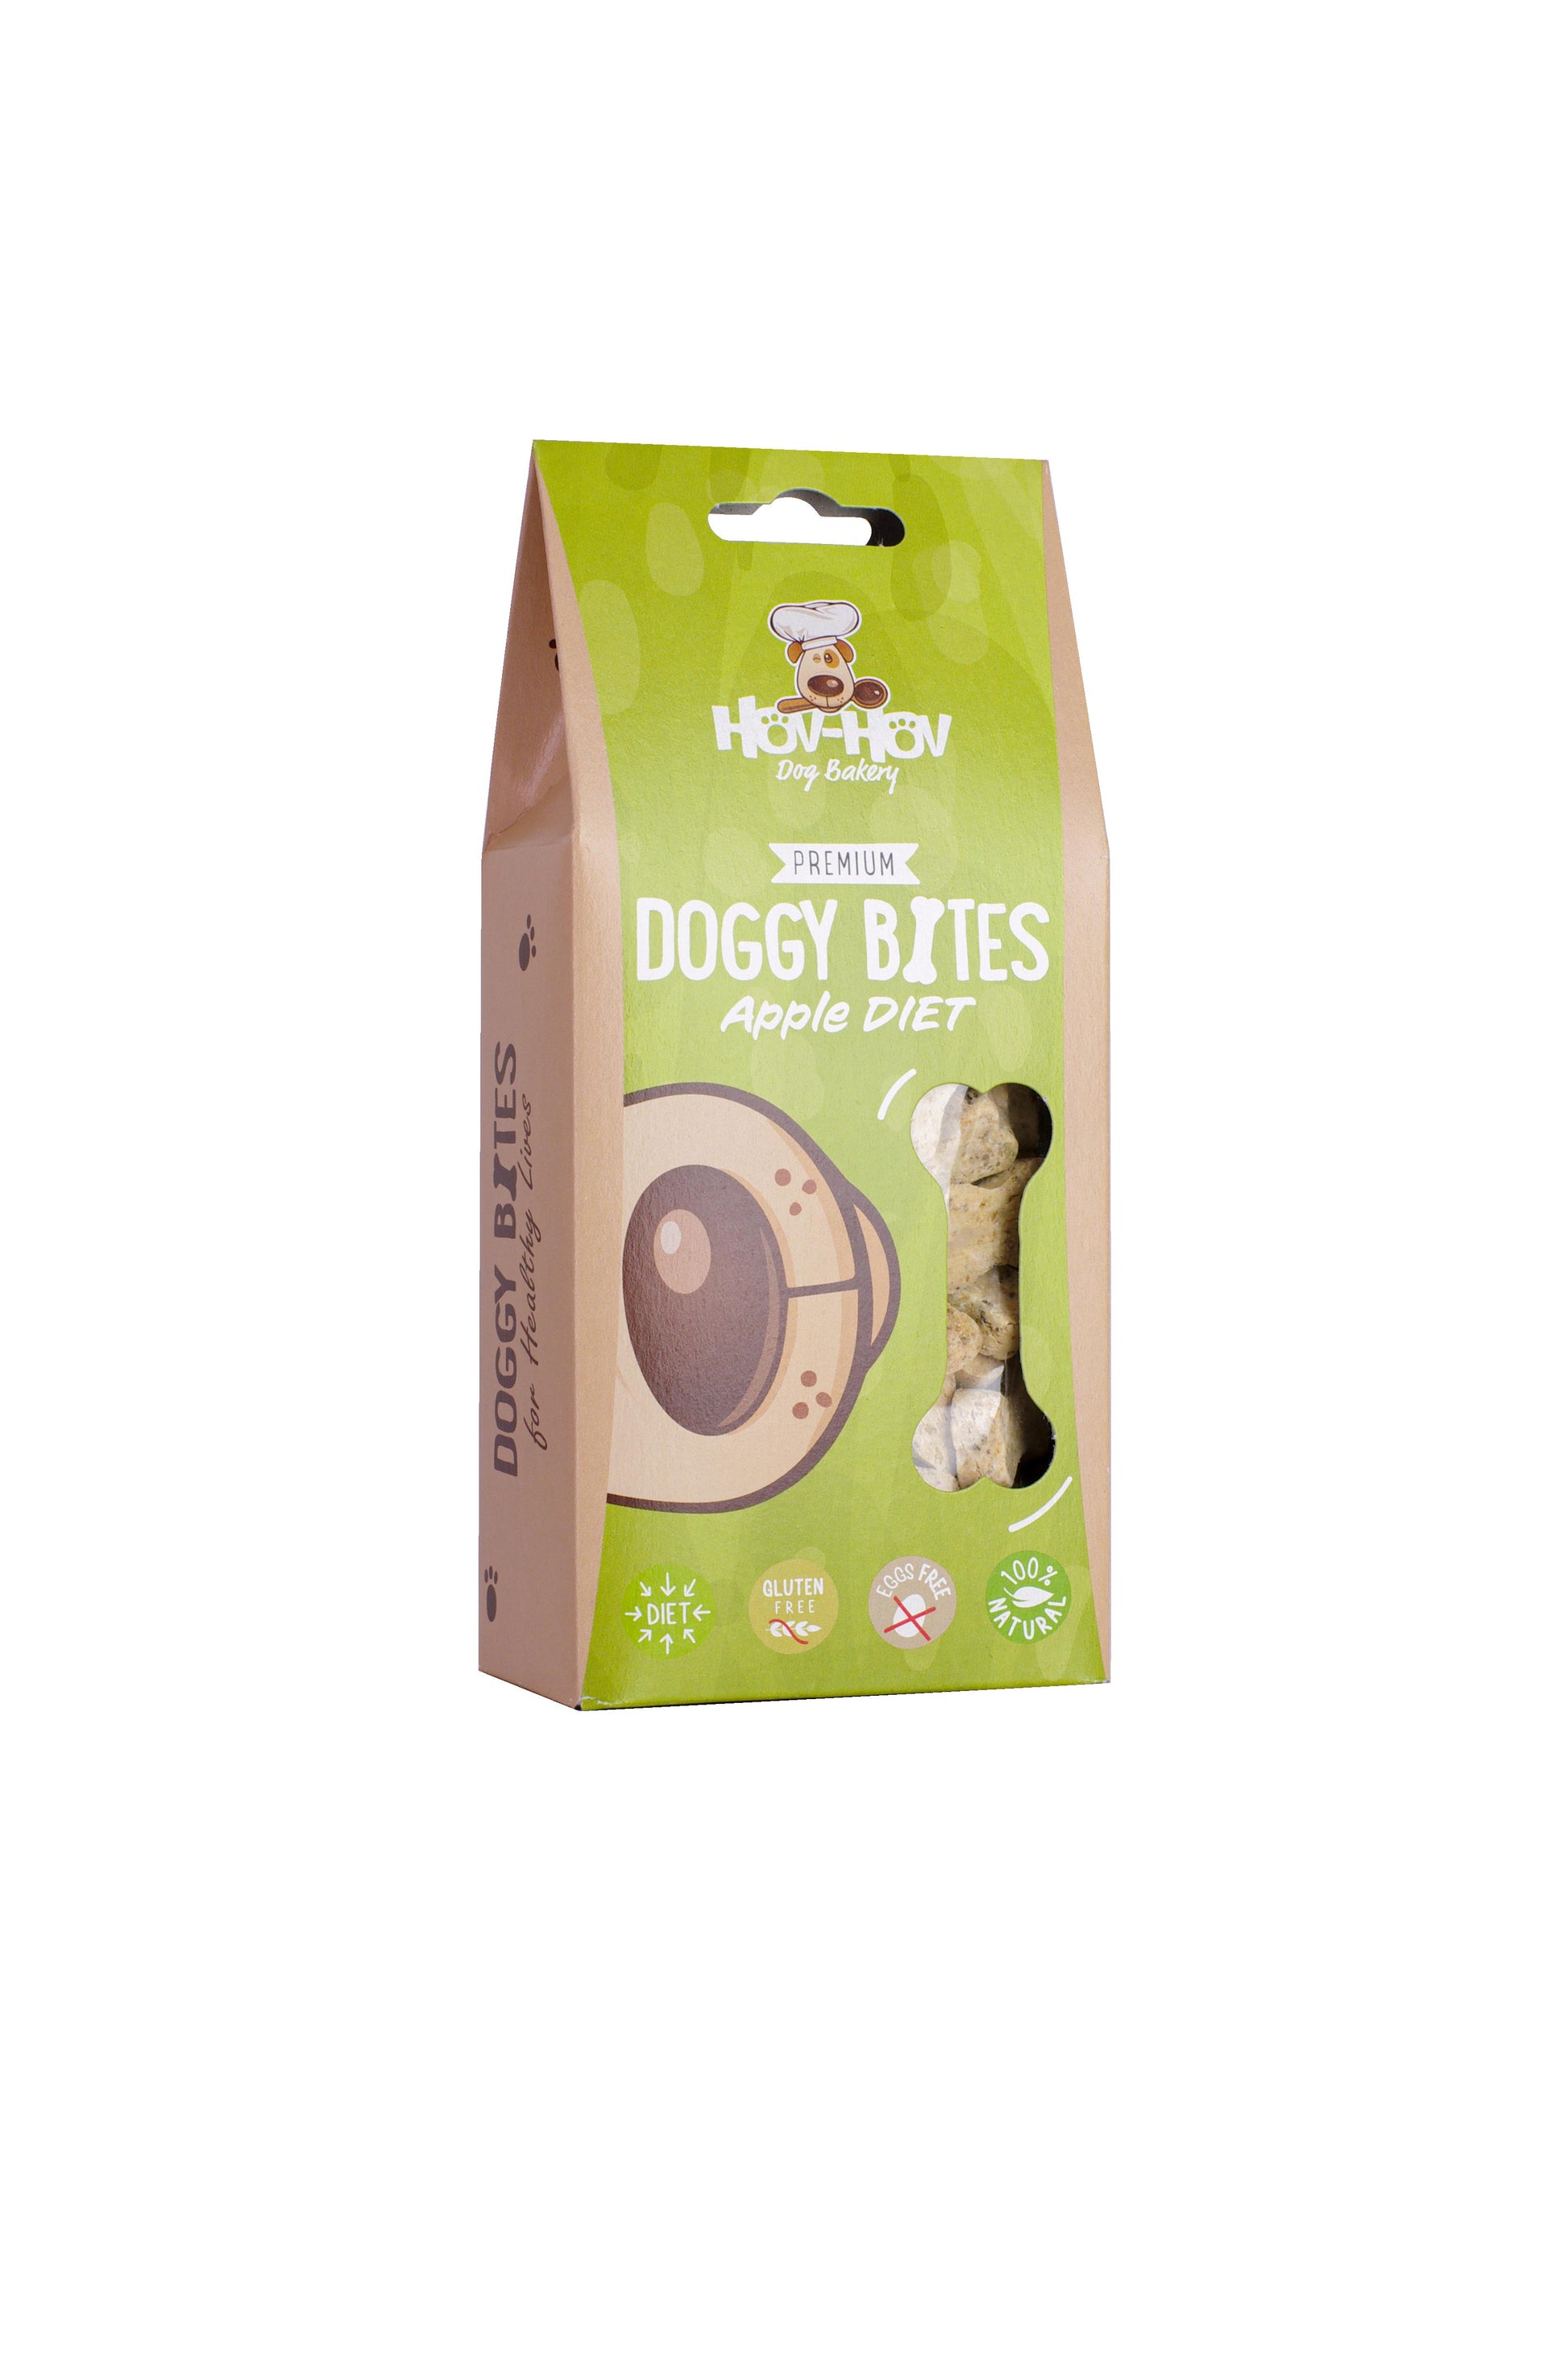 GALLETAS NATURALES DOGGY BITES 150GR APPLE DIET(manzana light)